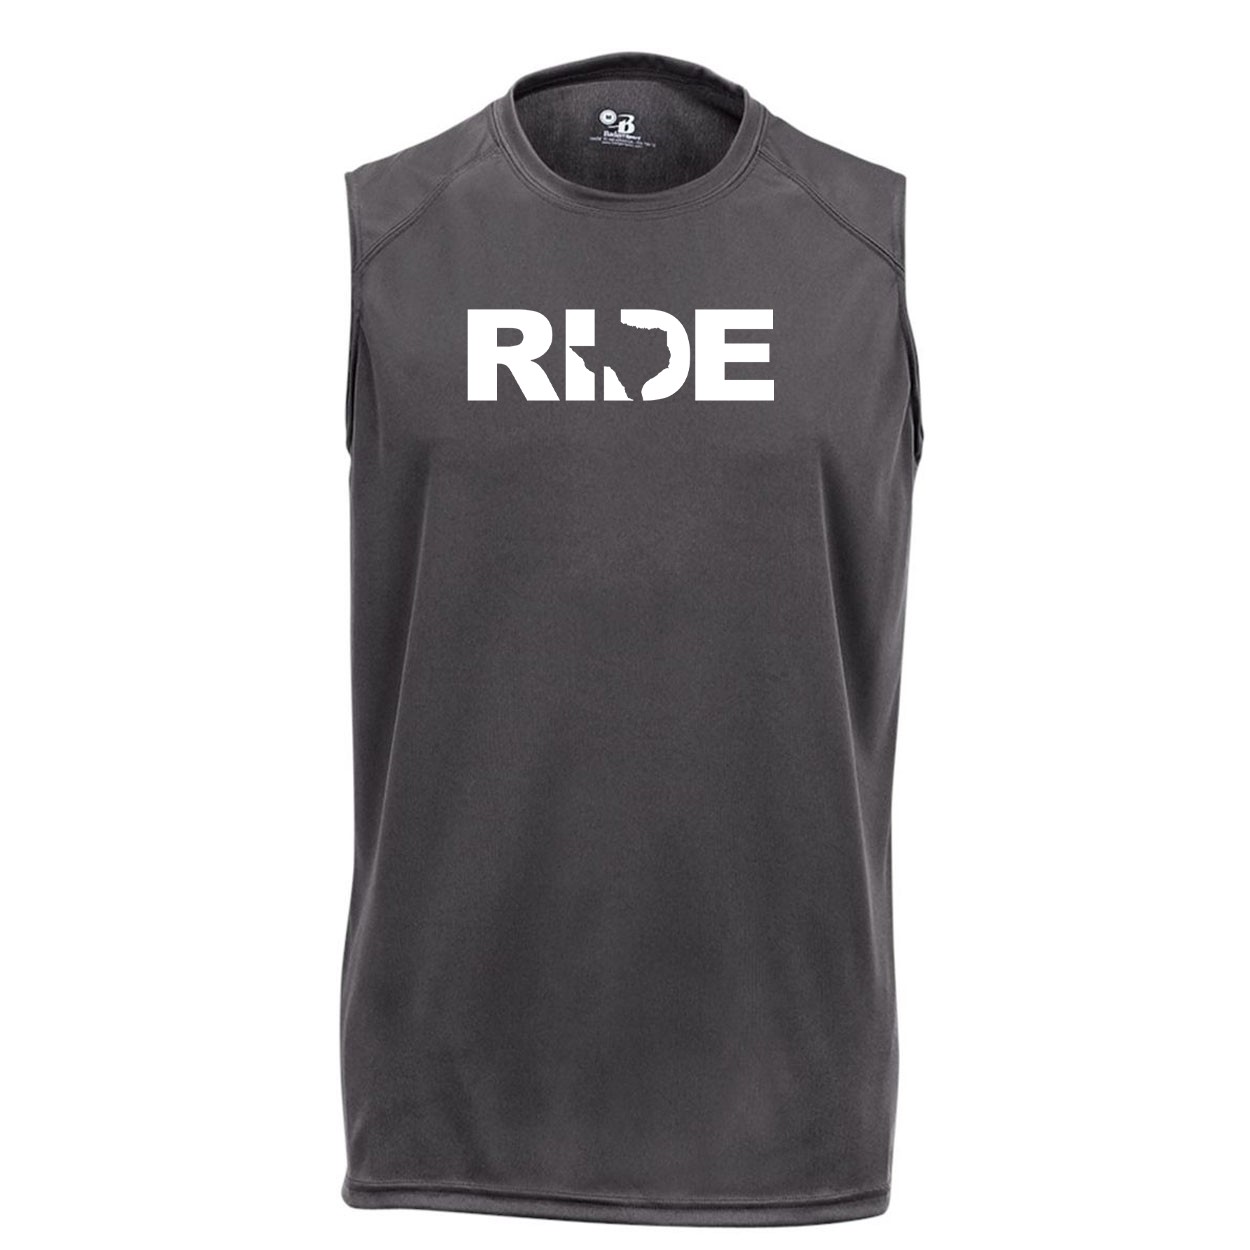 Ride Texas Classic Unisex Performance Sleeveless T-Shirt Graphite Gray (White Logo)